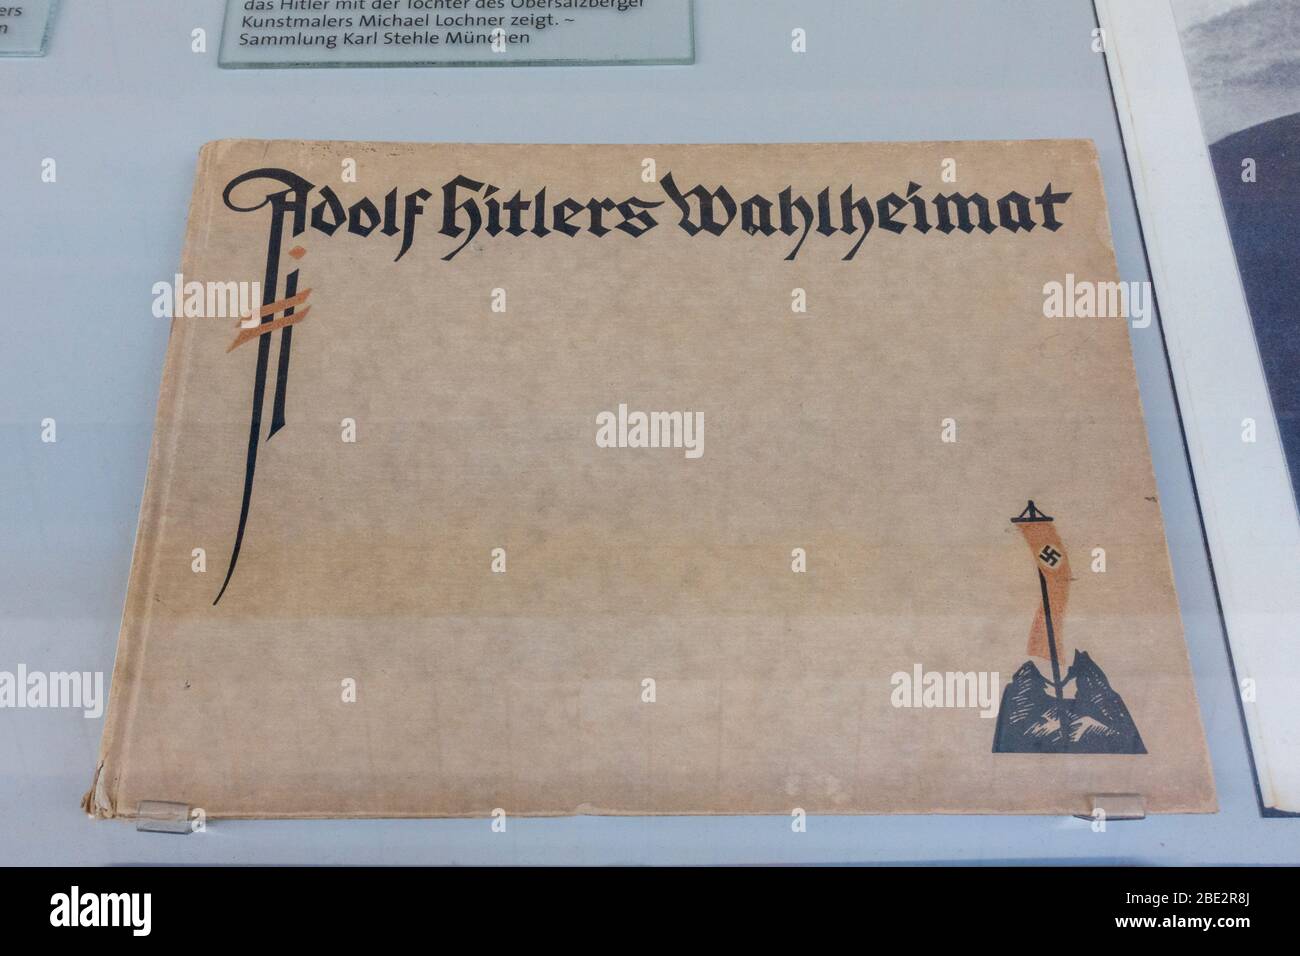 Couverture du livre 'Adolf Hitlers Wahlheimat', (Adolf Hitlers adopta Home', Centre de documentation Obersalzburg, Obersalzburg, Bavière, Allemagne. Banque D'Images